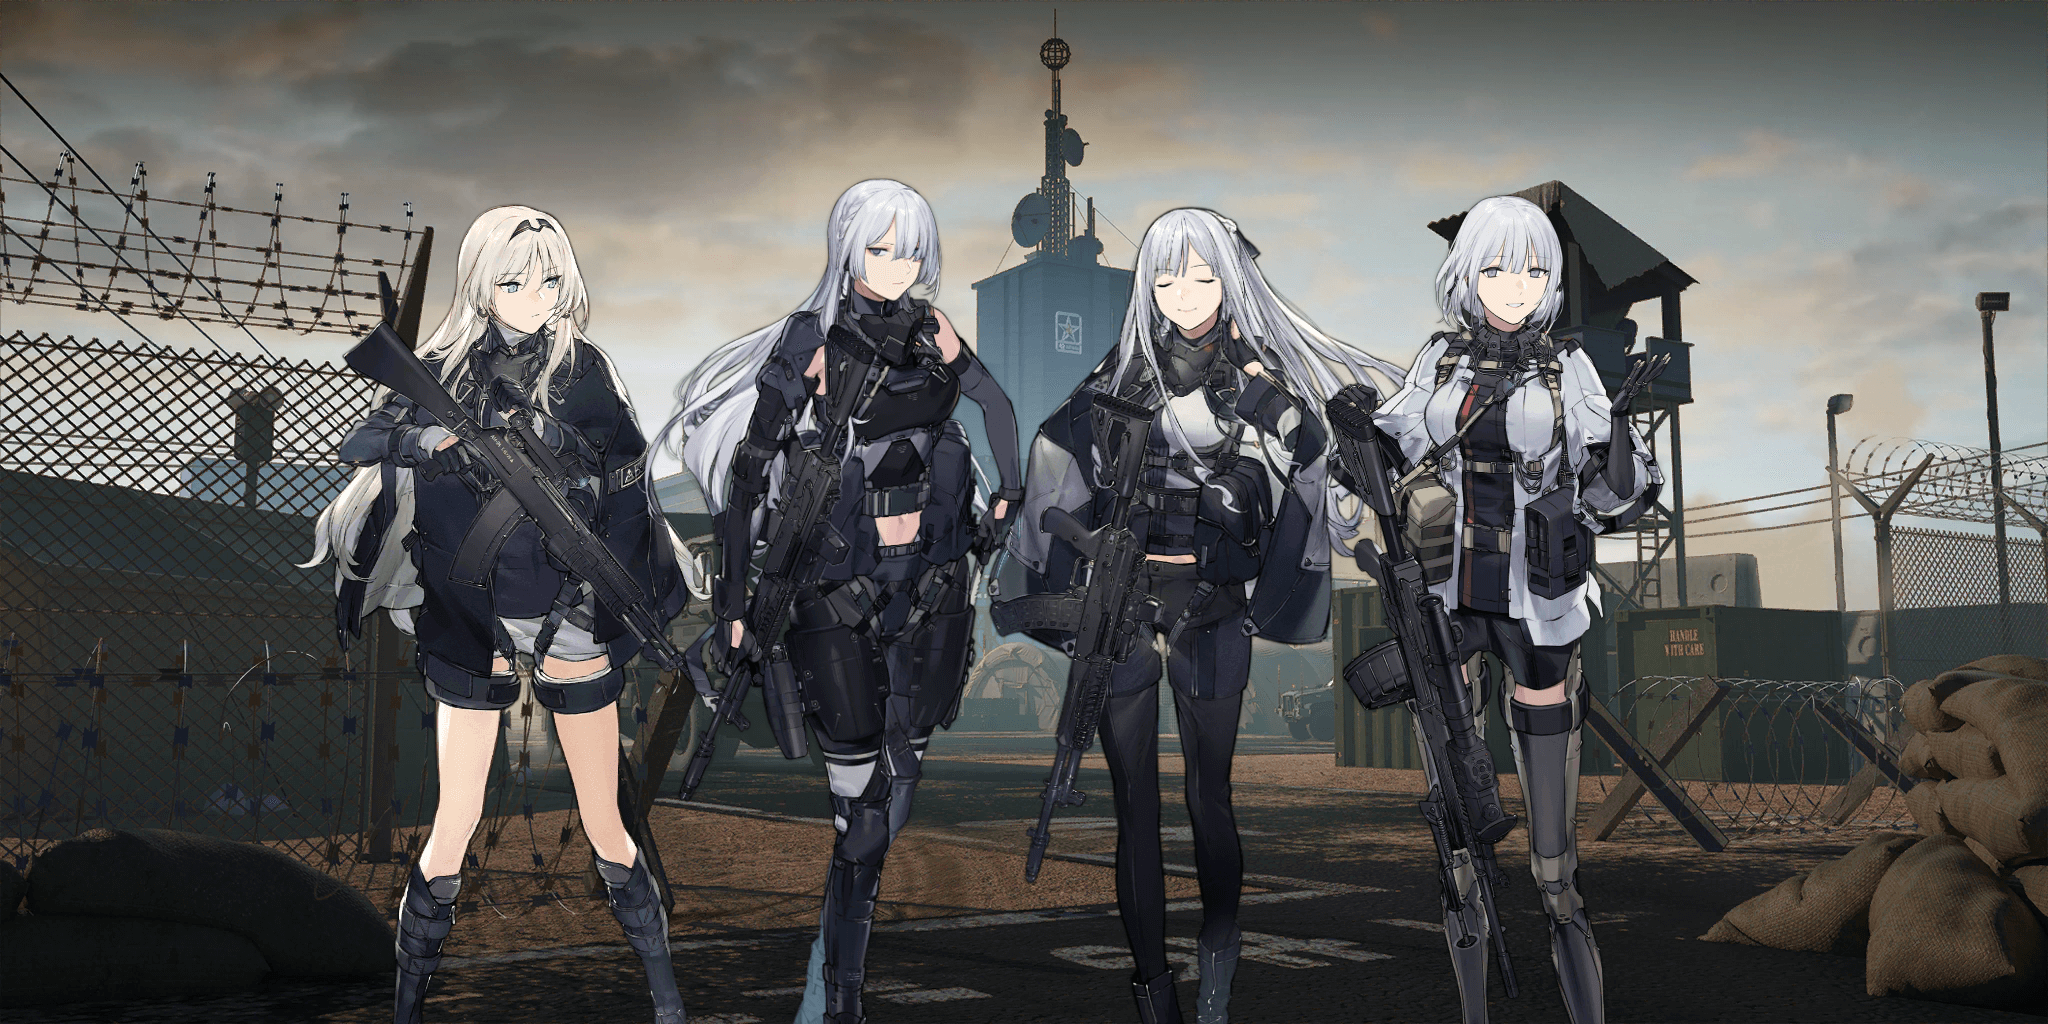 AN94 (Unit 1), AK15 (Unit 2, “White Mastiff”), AK12 (Unit 3, “Snow Wolf”), and RPK-16 (Unit 4, “Pandora”).